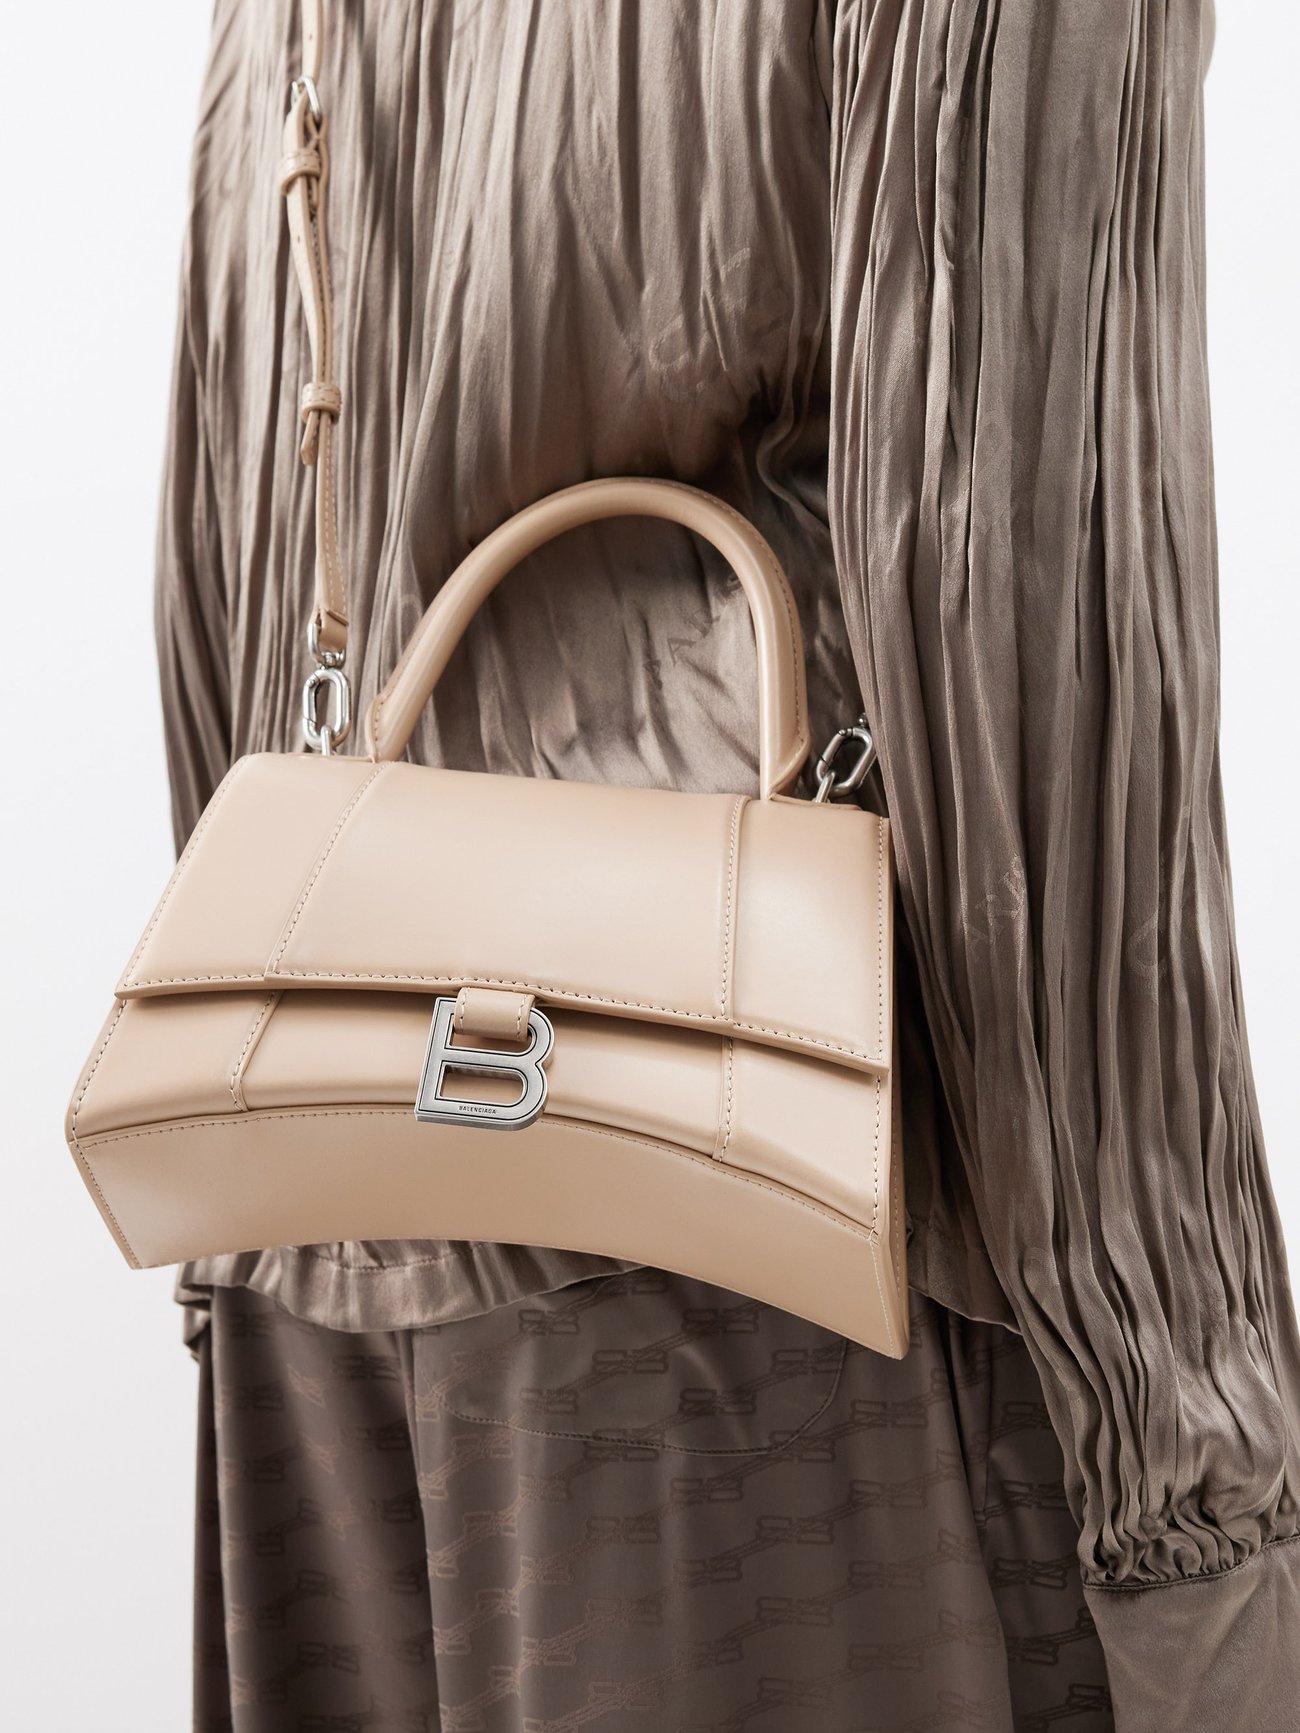 Beige Hourglass S leather bag, Balenciaga